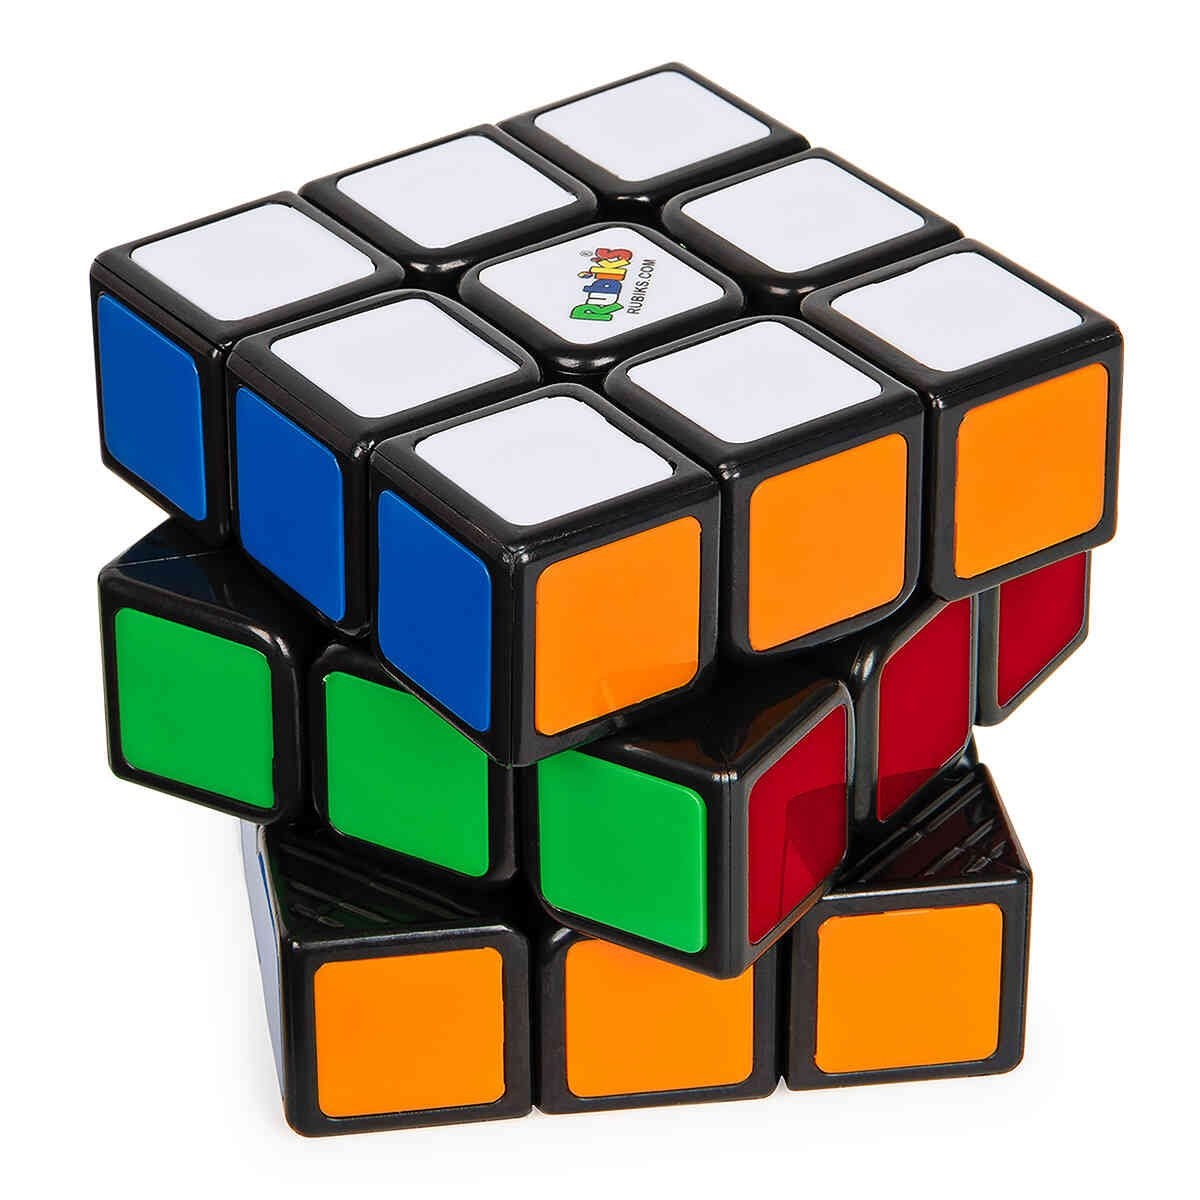 Cubo Mágico Profissional - 3x3 - Rubiks - 2794 - Sunny - Real Brinquedos